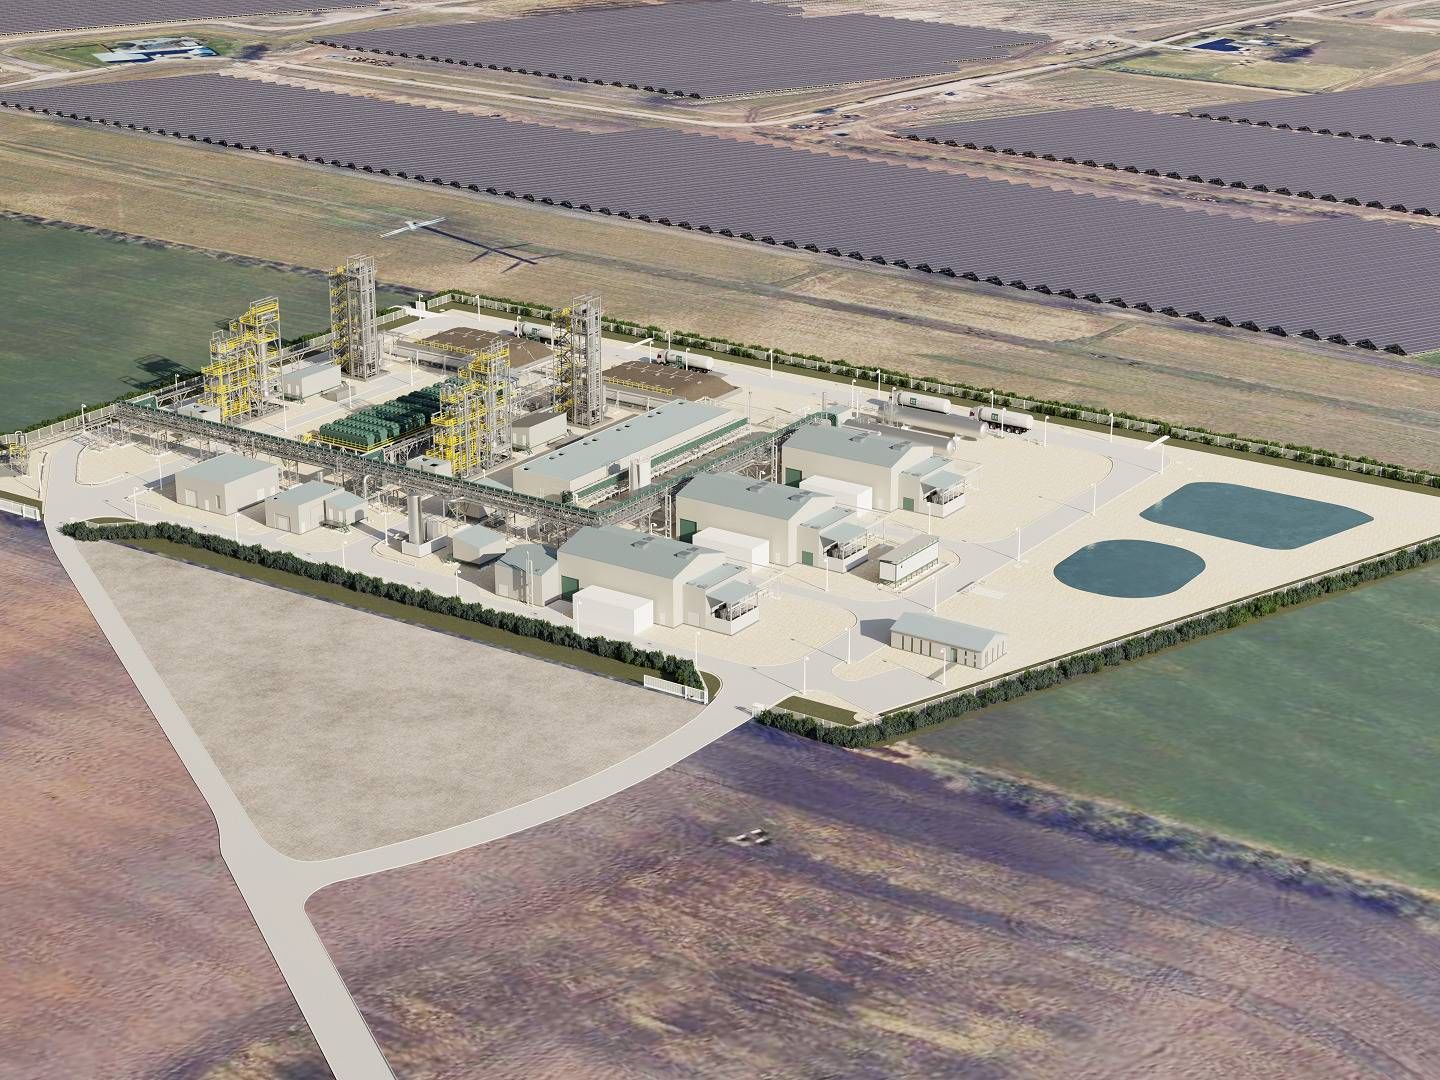 A visual aid for European Energy's methanol plant in Kassø | Foto: European Energy/pr.